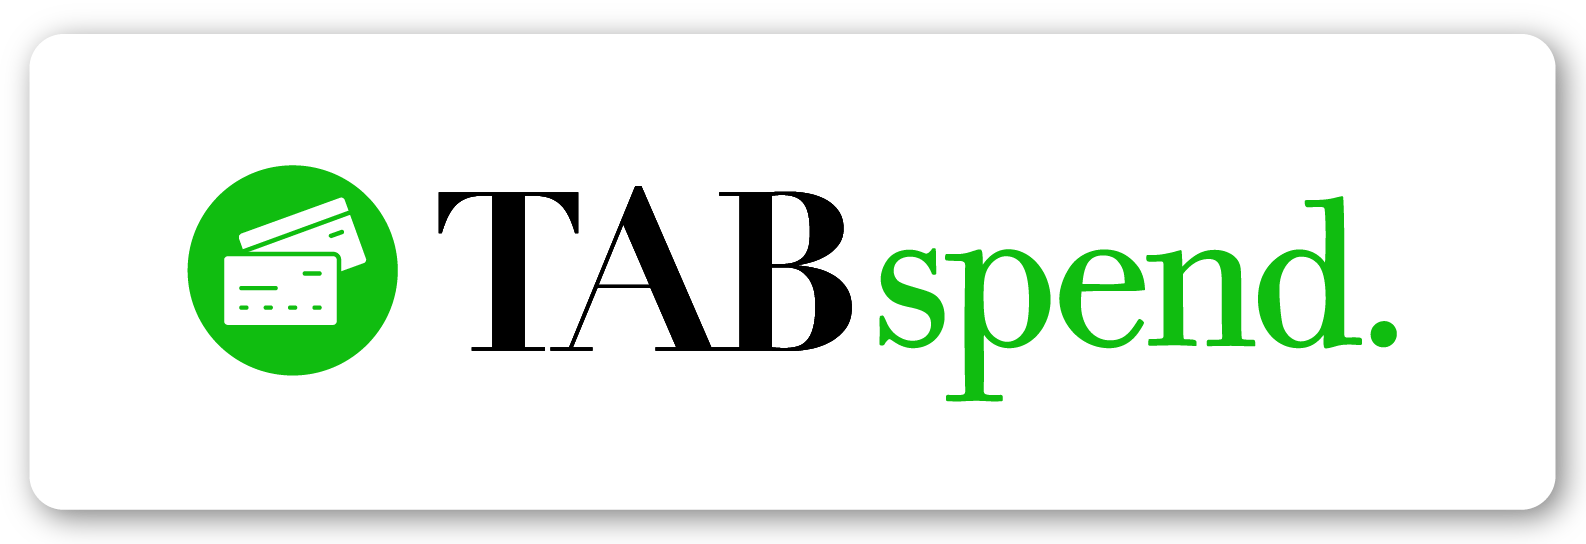 TAB Spend Logo